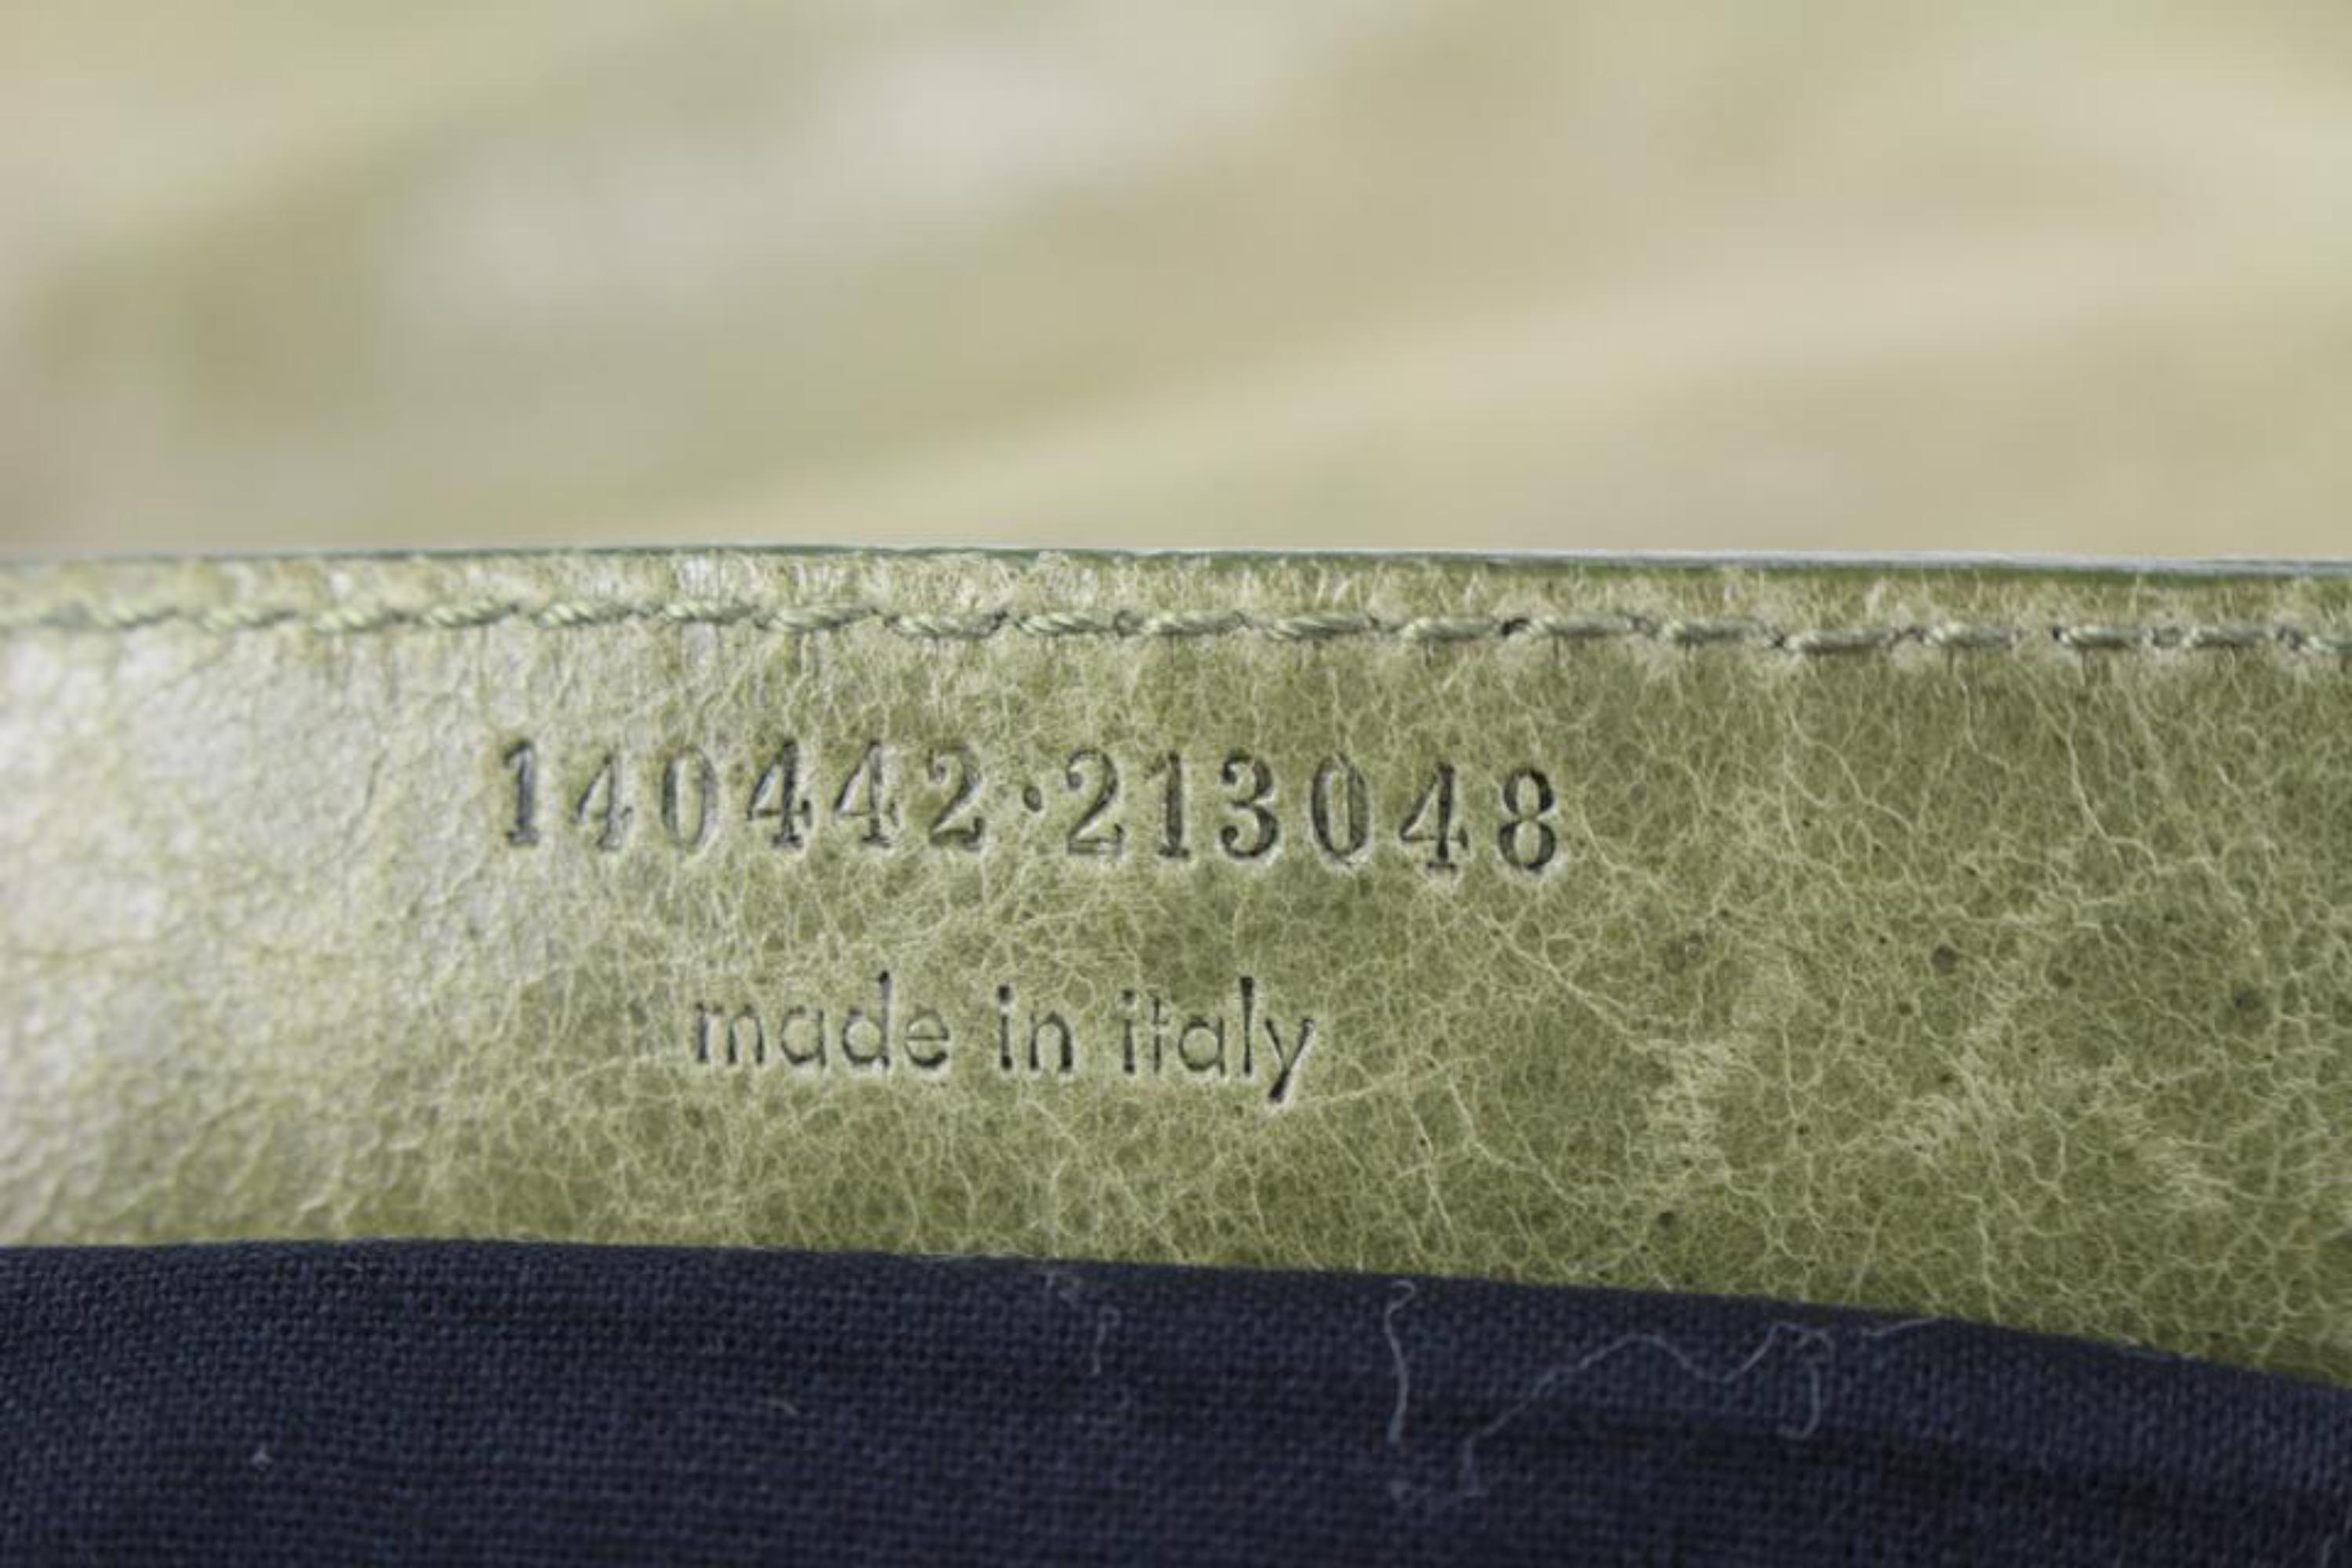 Balenciaga Olive Taupe Agneau Leather The Day Hobo 17ba53s For Sale 2